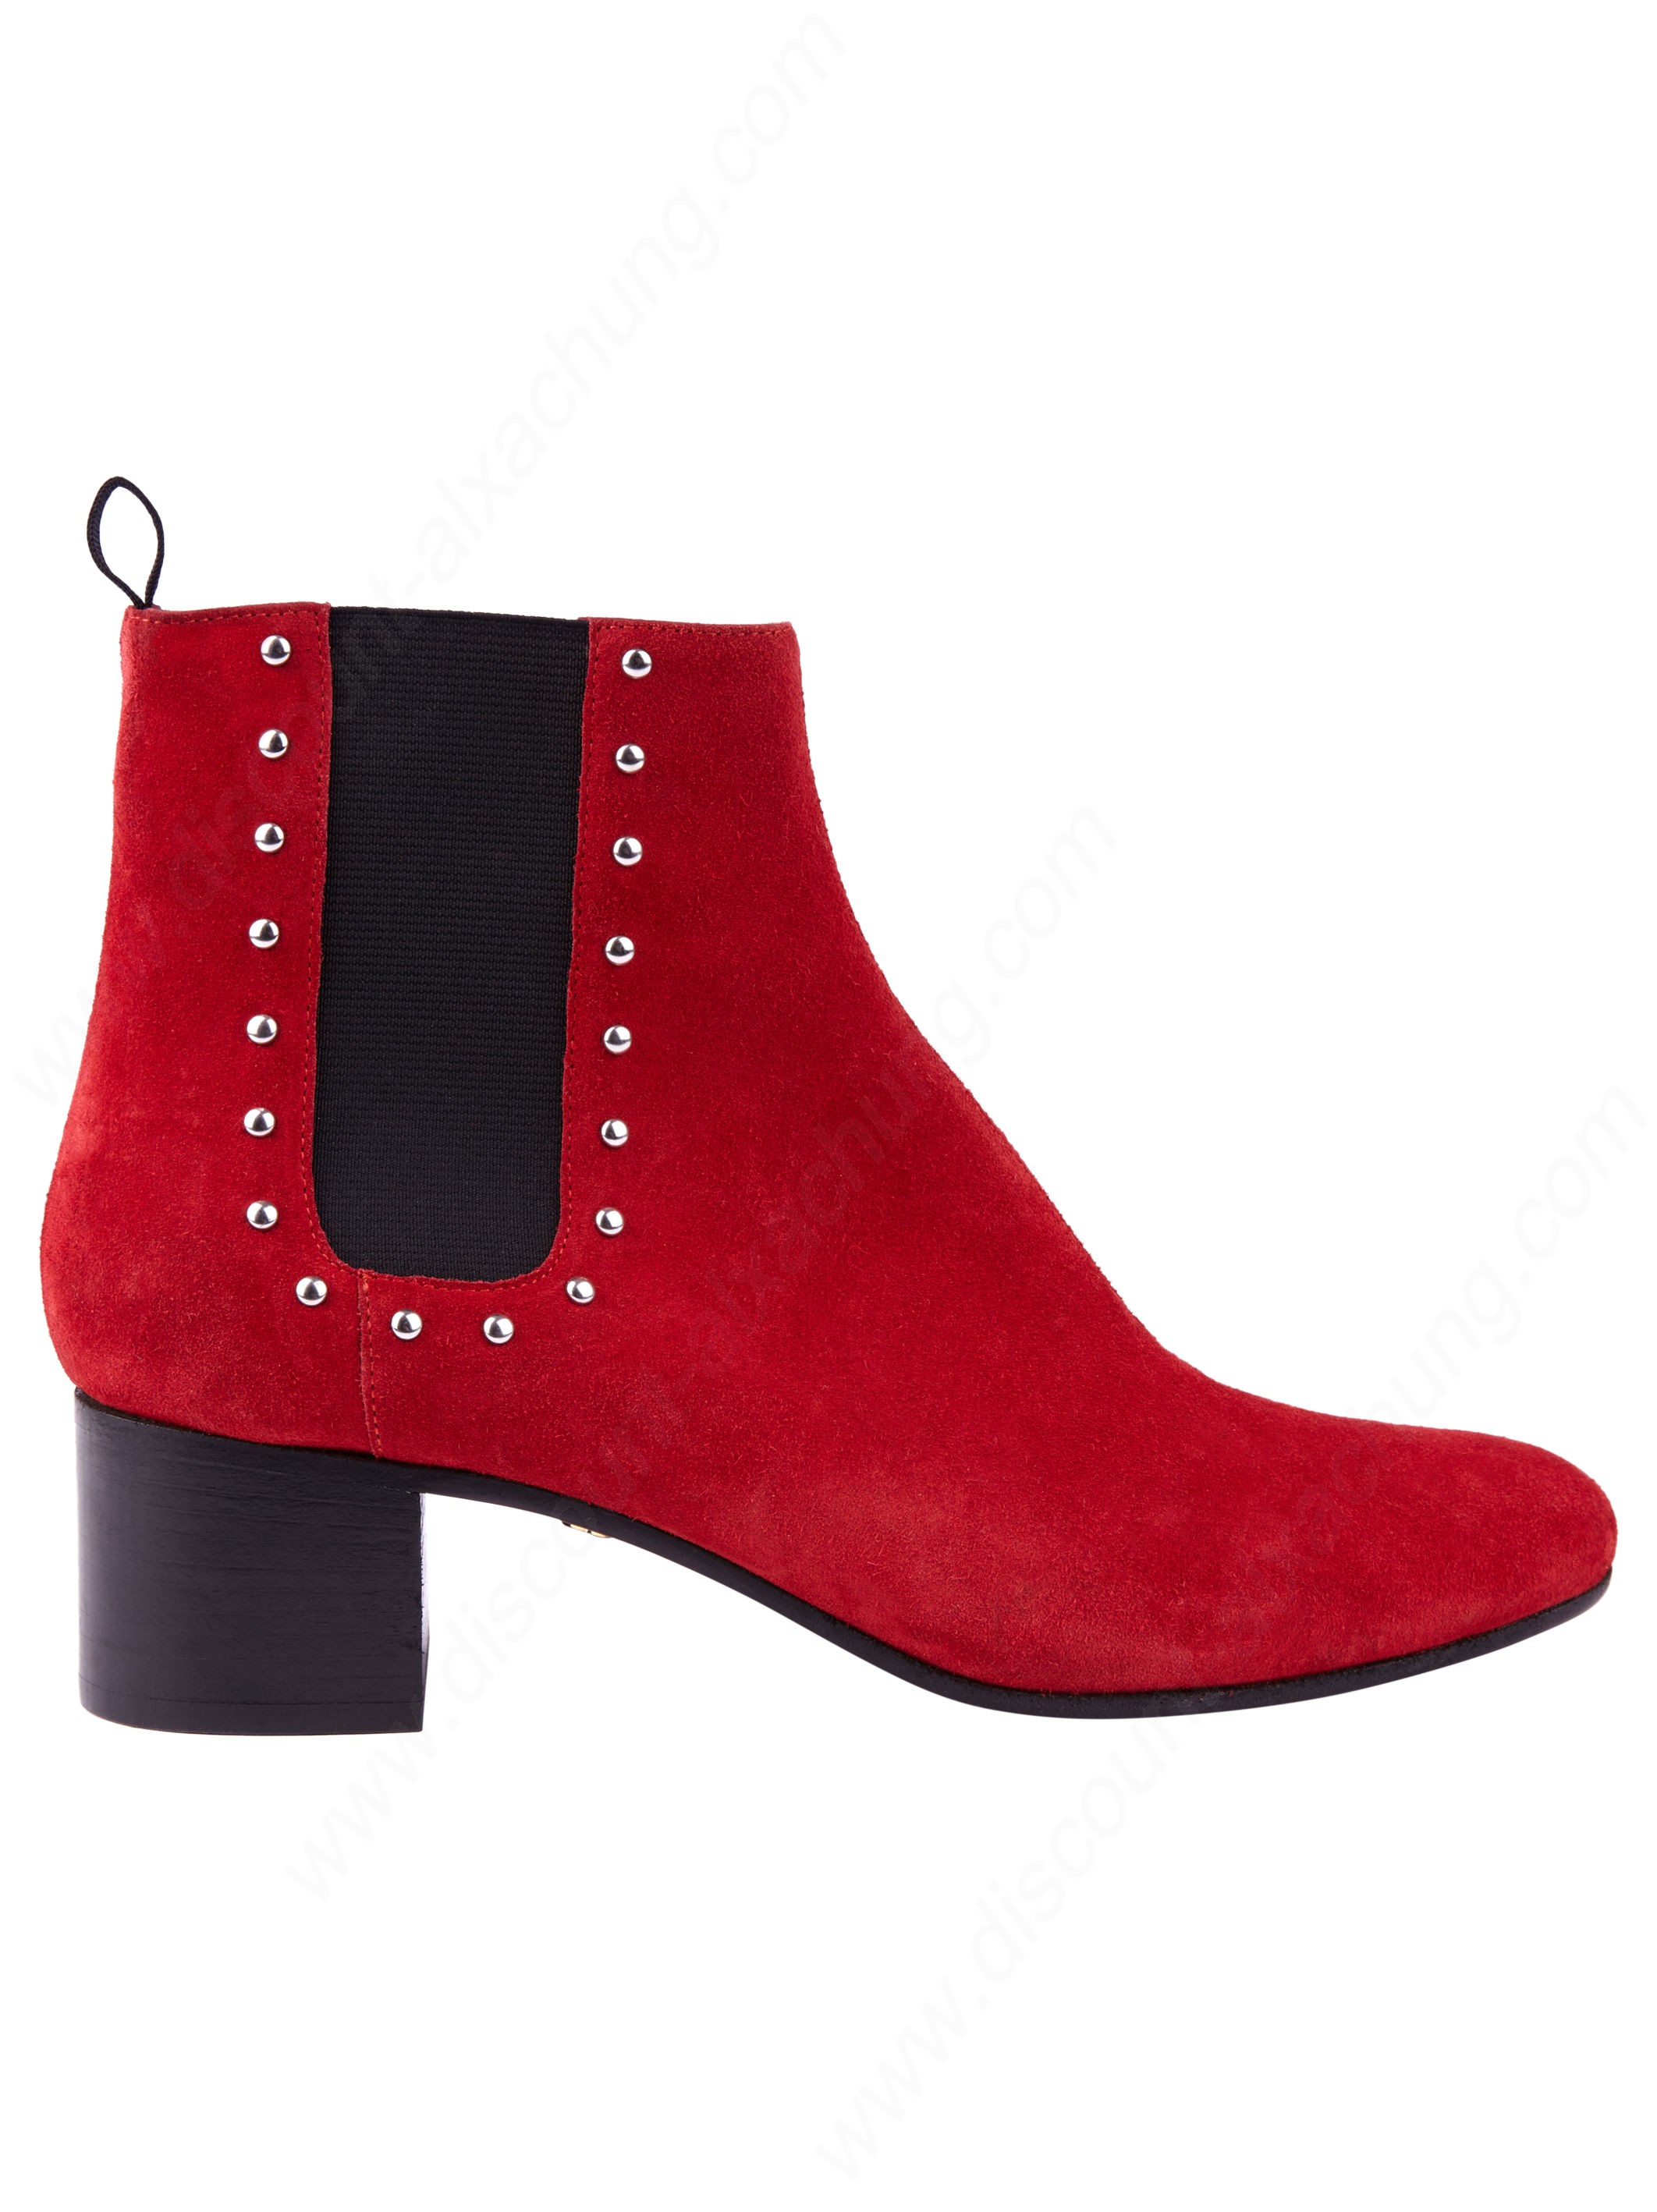 Alexachung Red Studded Chelsea Boot - Alexachung Red Studded Chelsea Boot